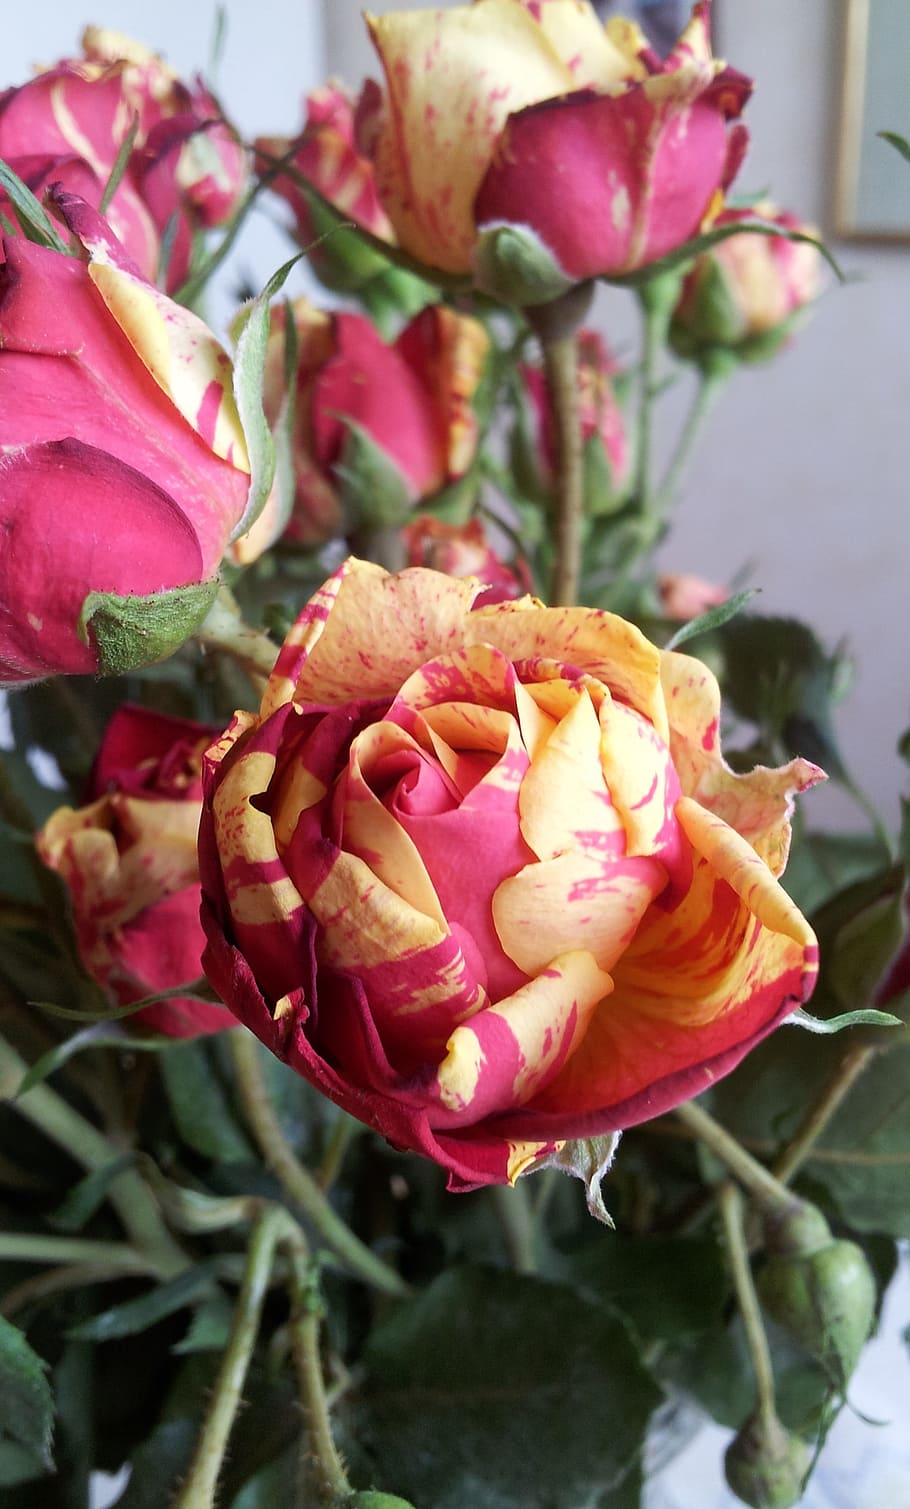 ros, yellow, red, rödgul, rödgul rose, beautiful rose, two tone, two-tone rose, roses, flowers